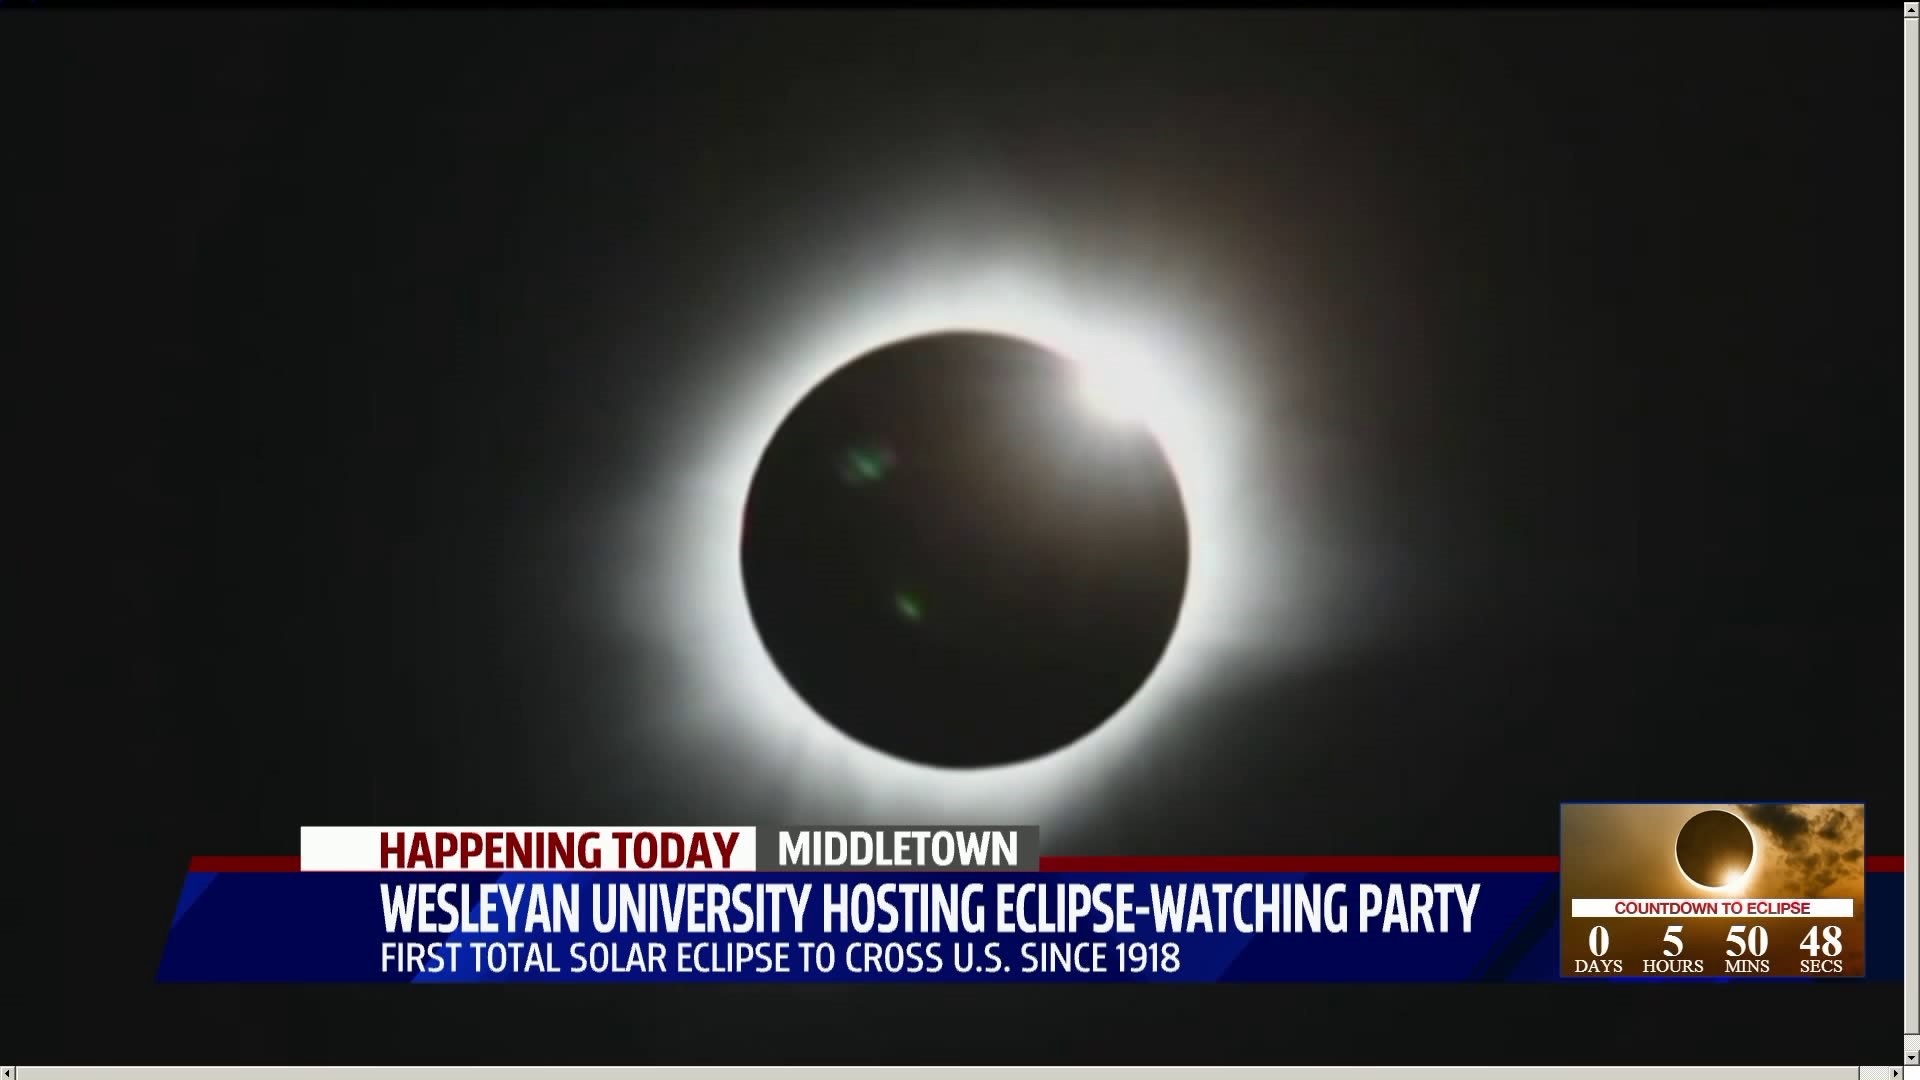 Wesleyan hosts eclipse-watching